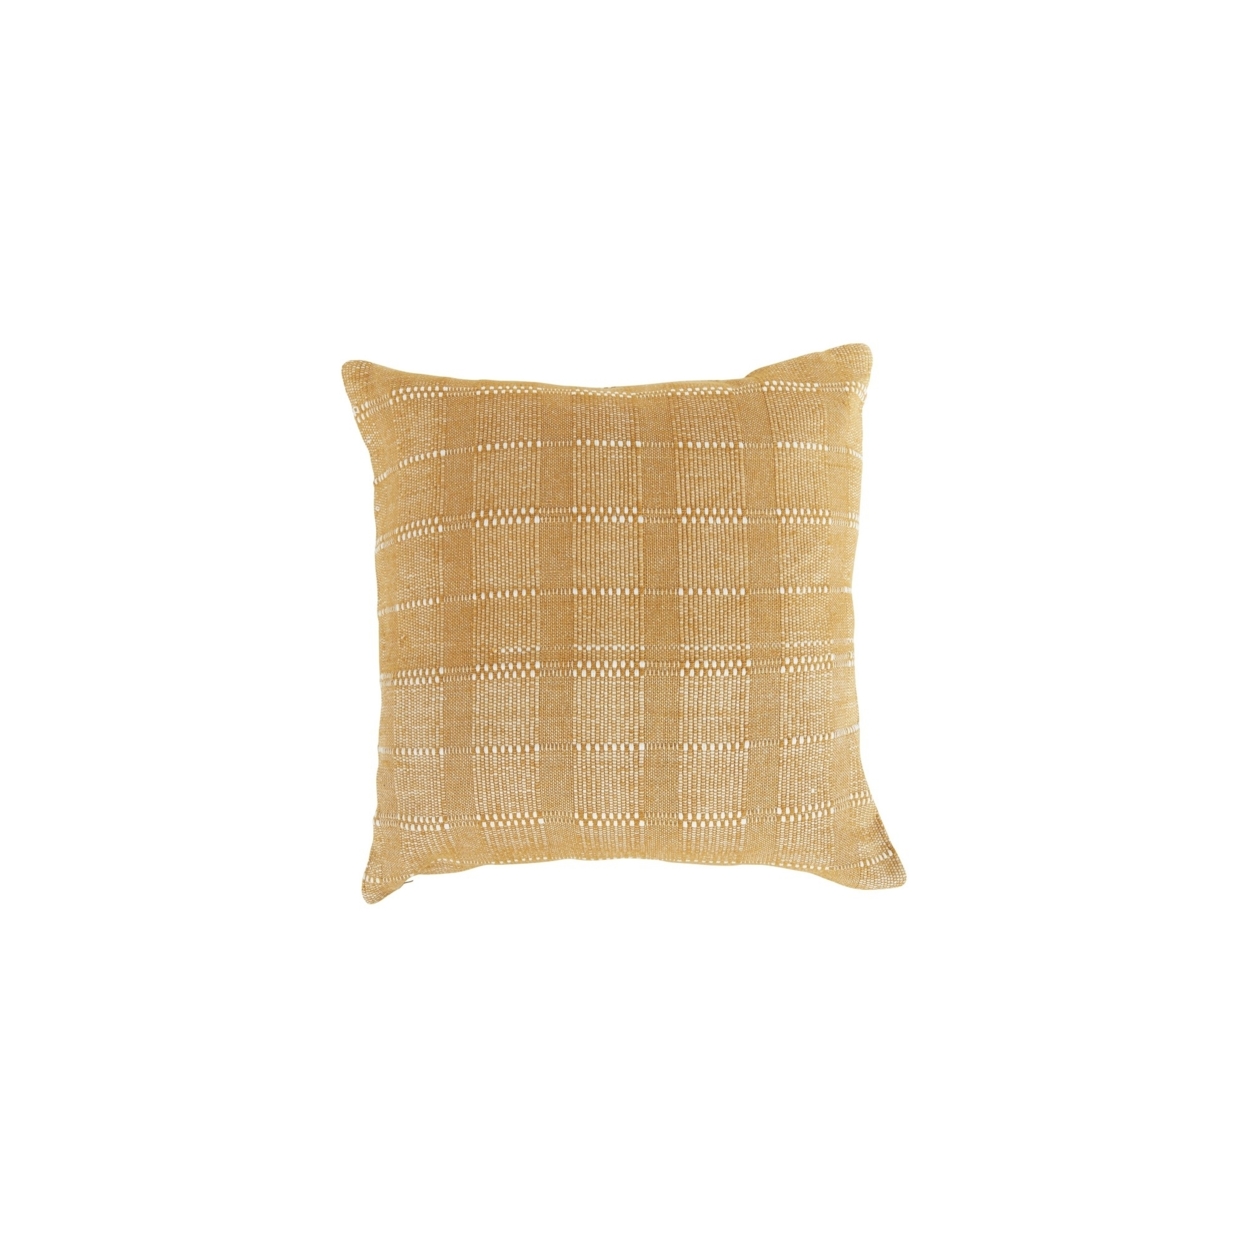 Lisa 22 X 22 Soft Fabric Accent Throw Pillow, Woven Plaid Design, Yellow- Saltoro Sherpi